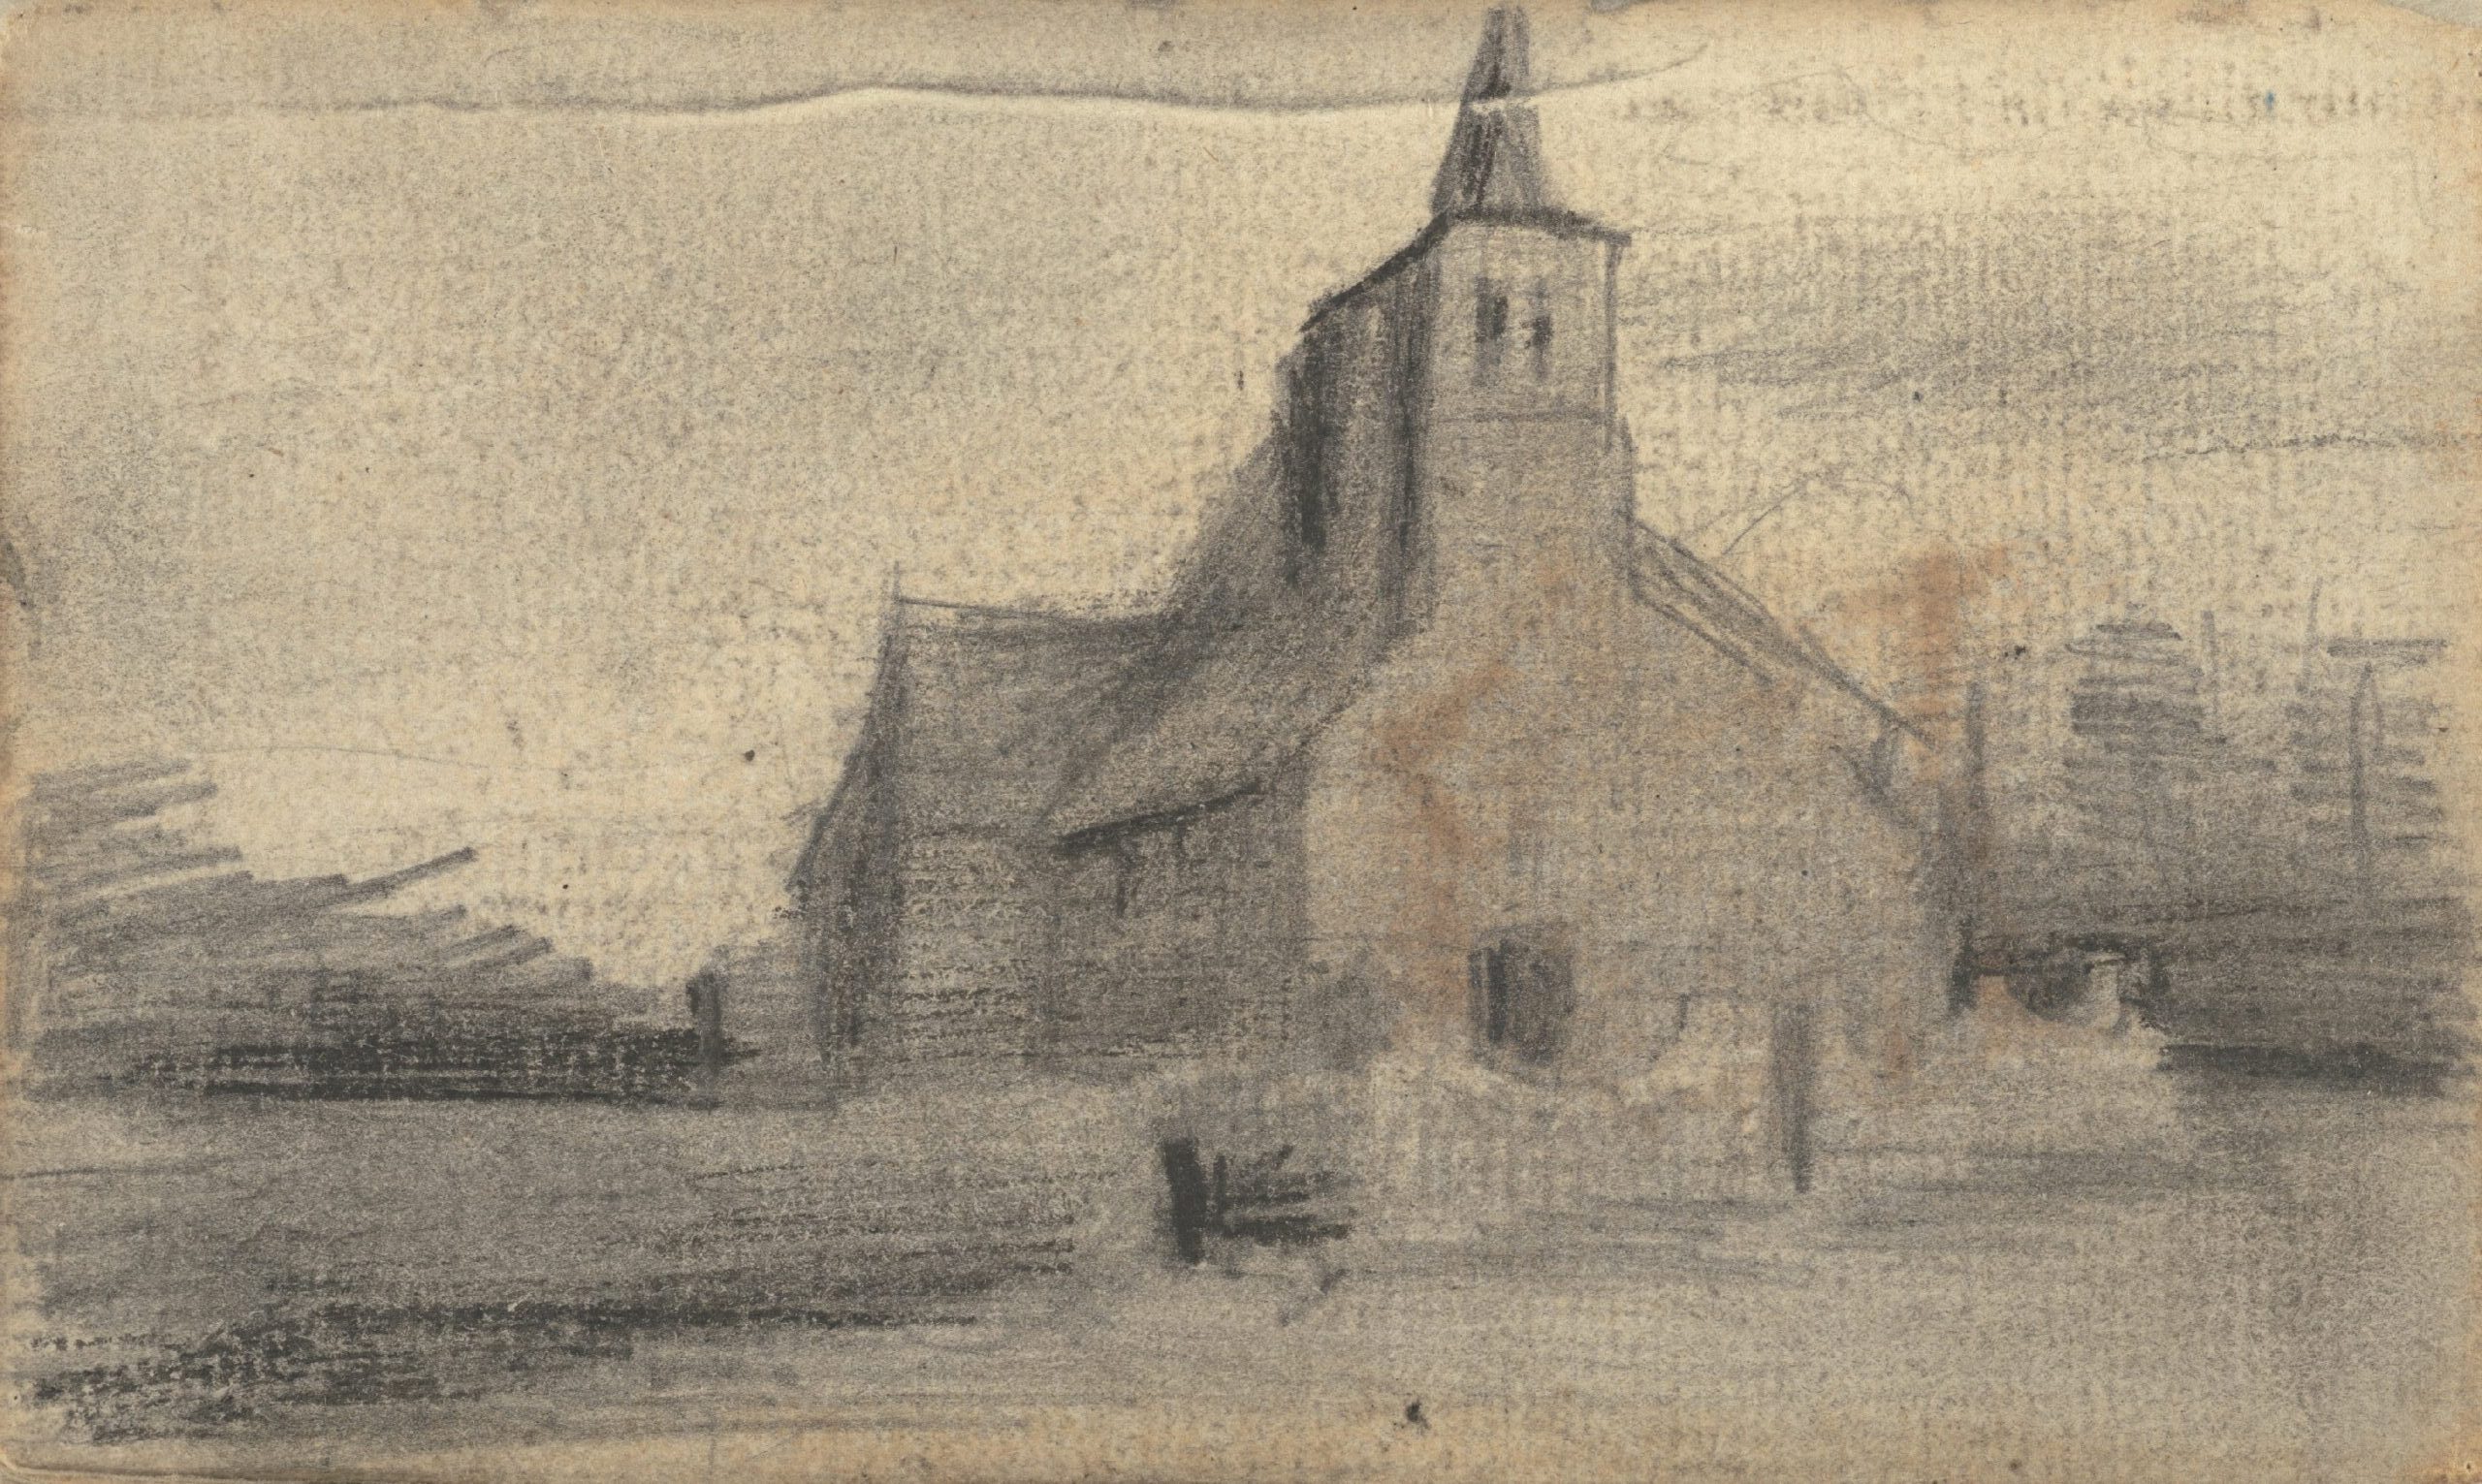 Kerk Vincent van Gogh (1853 - 1890), Nuenen, november 1884-september 1885